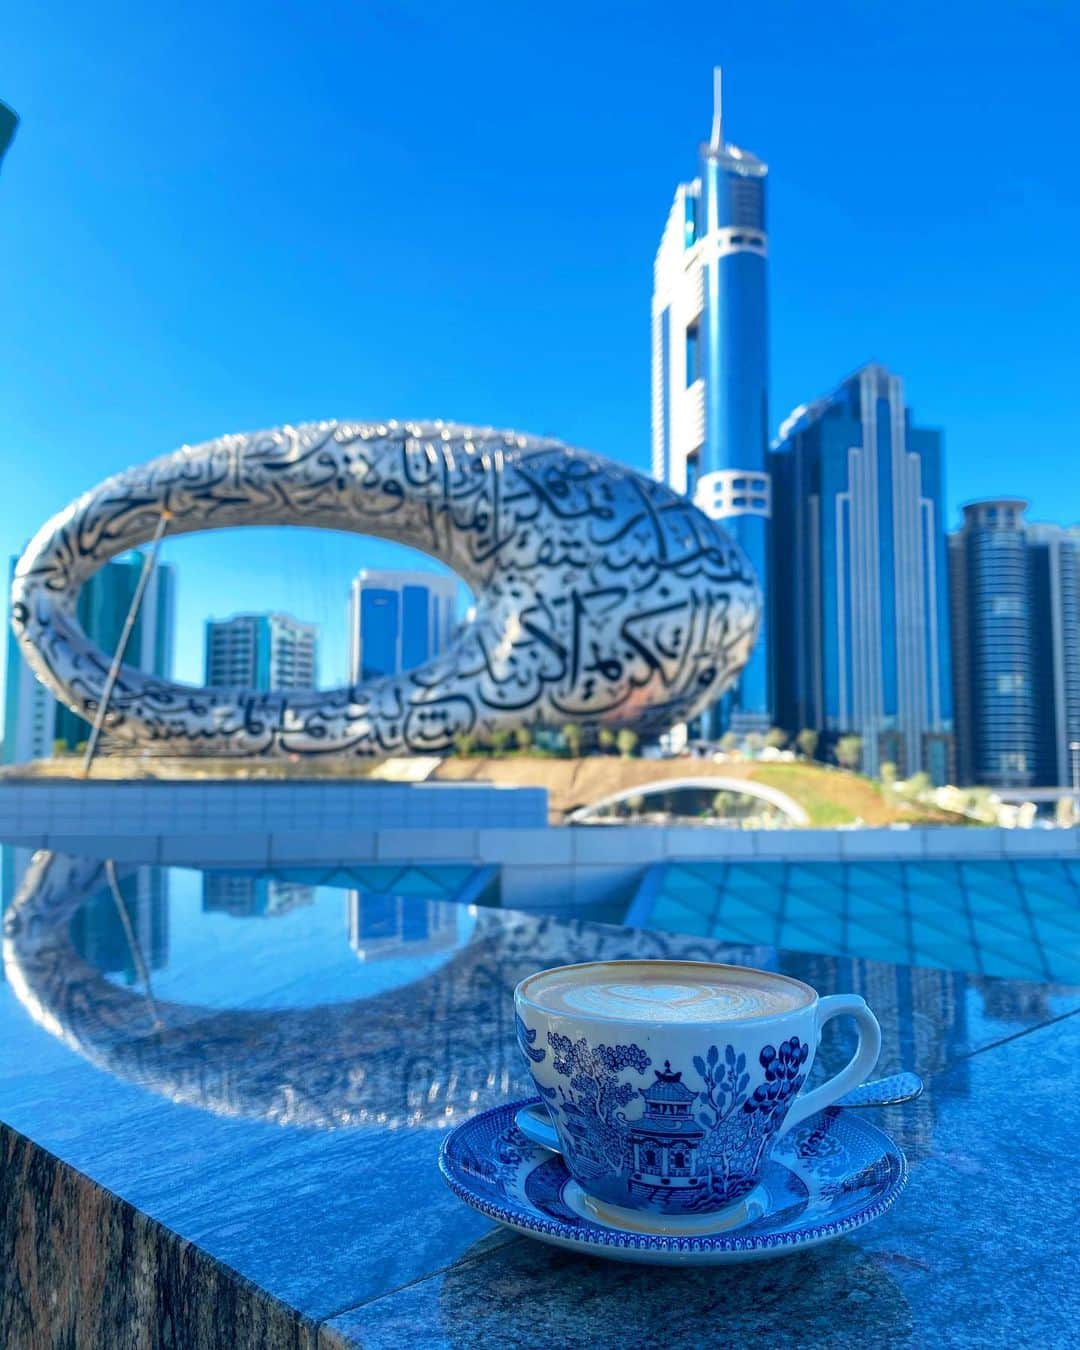 Rieのインスタグラム：「【☕️Leen's at Emirates towers】  完成間近のドバイ未来博物館を (The Museum of The Future)  眺めながらランチ  ここは人気のお店で、午前中からテラス席は満席に近い状態からになりますが  お店の人がミュージアム側の端のいい席を案内してくれたので  綺麗にミュージアムの写真も撮れました🙌  @leens_casual_to_gourmet   #themuseumofthefuture  #emiratestowers  #teatime #☕️ #ドバイ未来博物館 #未来博物館 #ティータイム #ランチタイム #ドバイ #ドバイ旅行 #ドバイ観光 #ドバイインスタ映え  #ドバイ生活  #ドバイグラム  #ドバイ在住 #海外暮らし #海外旅行 #海外旅行好きな人と繋がりたい  #タビジョ #ビジットドバイ  #middleeast  #dubai #dubaitrip #dubaigram  #dubailife #dubaiinstagram  #mydubai #visitdubai #instagrammable」